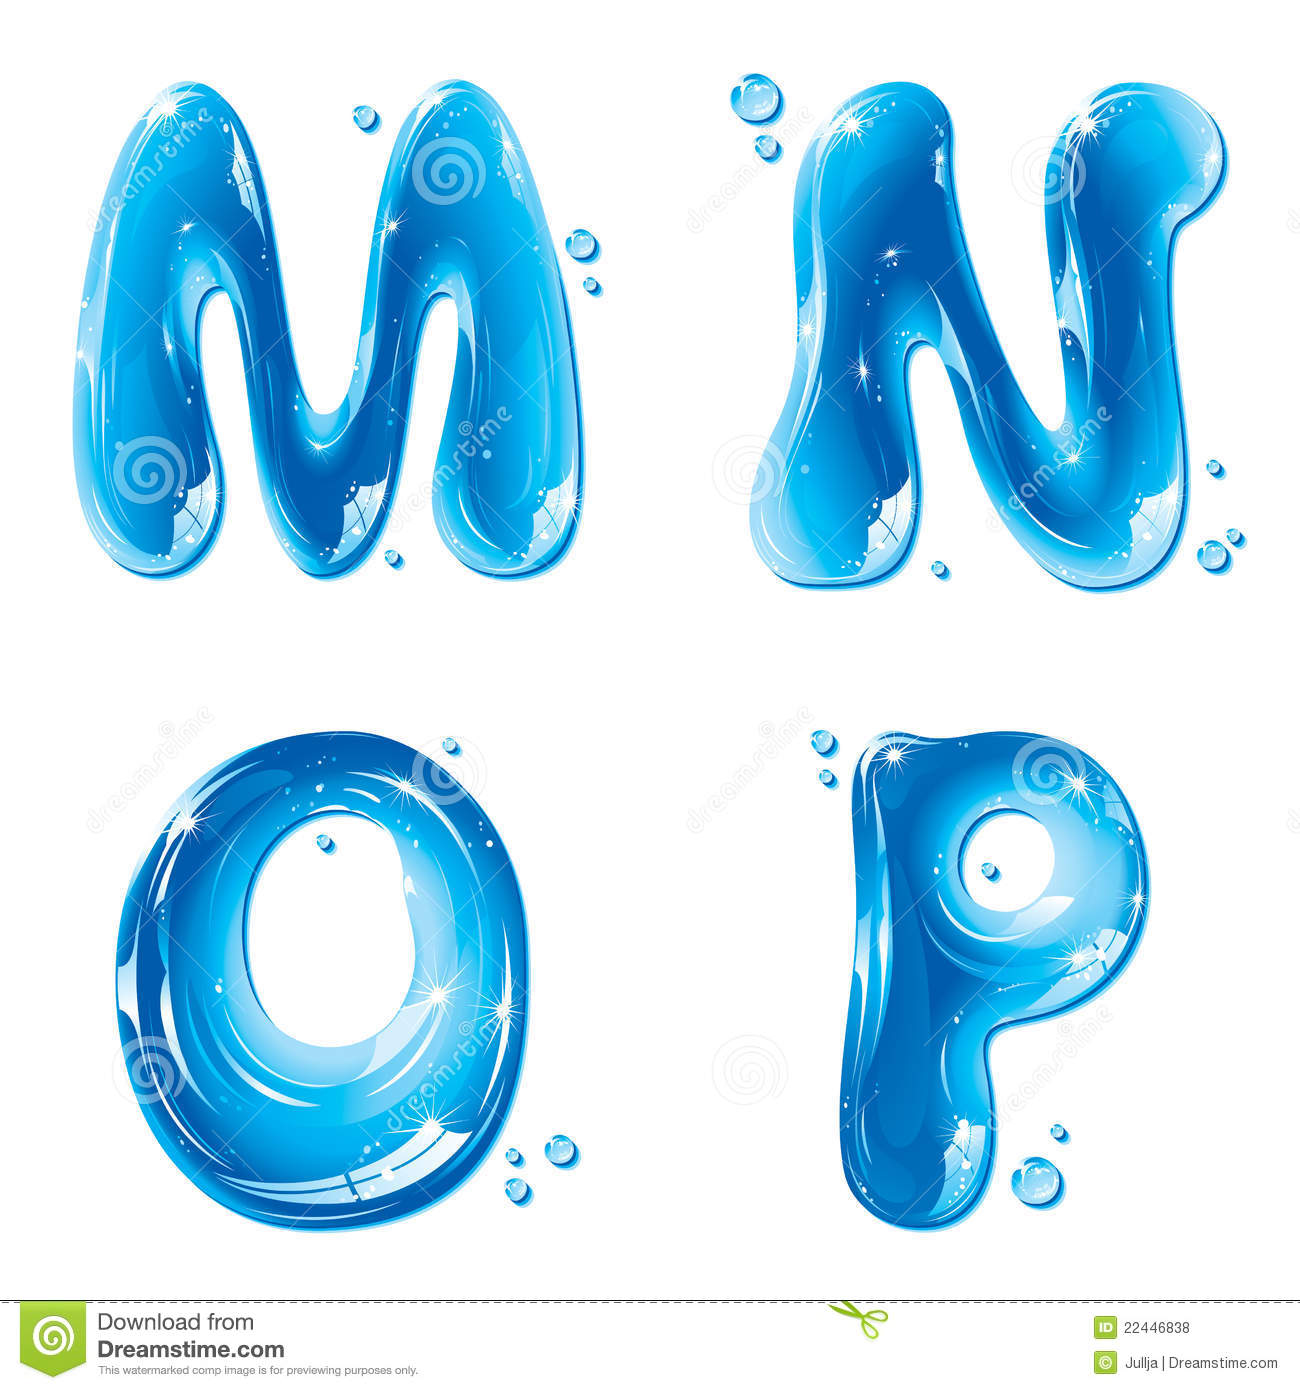 14 Liquid Water Letters Design Images Liquid Water Letters Font